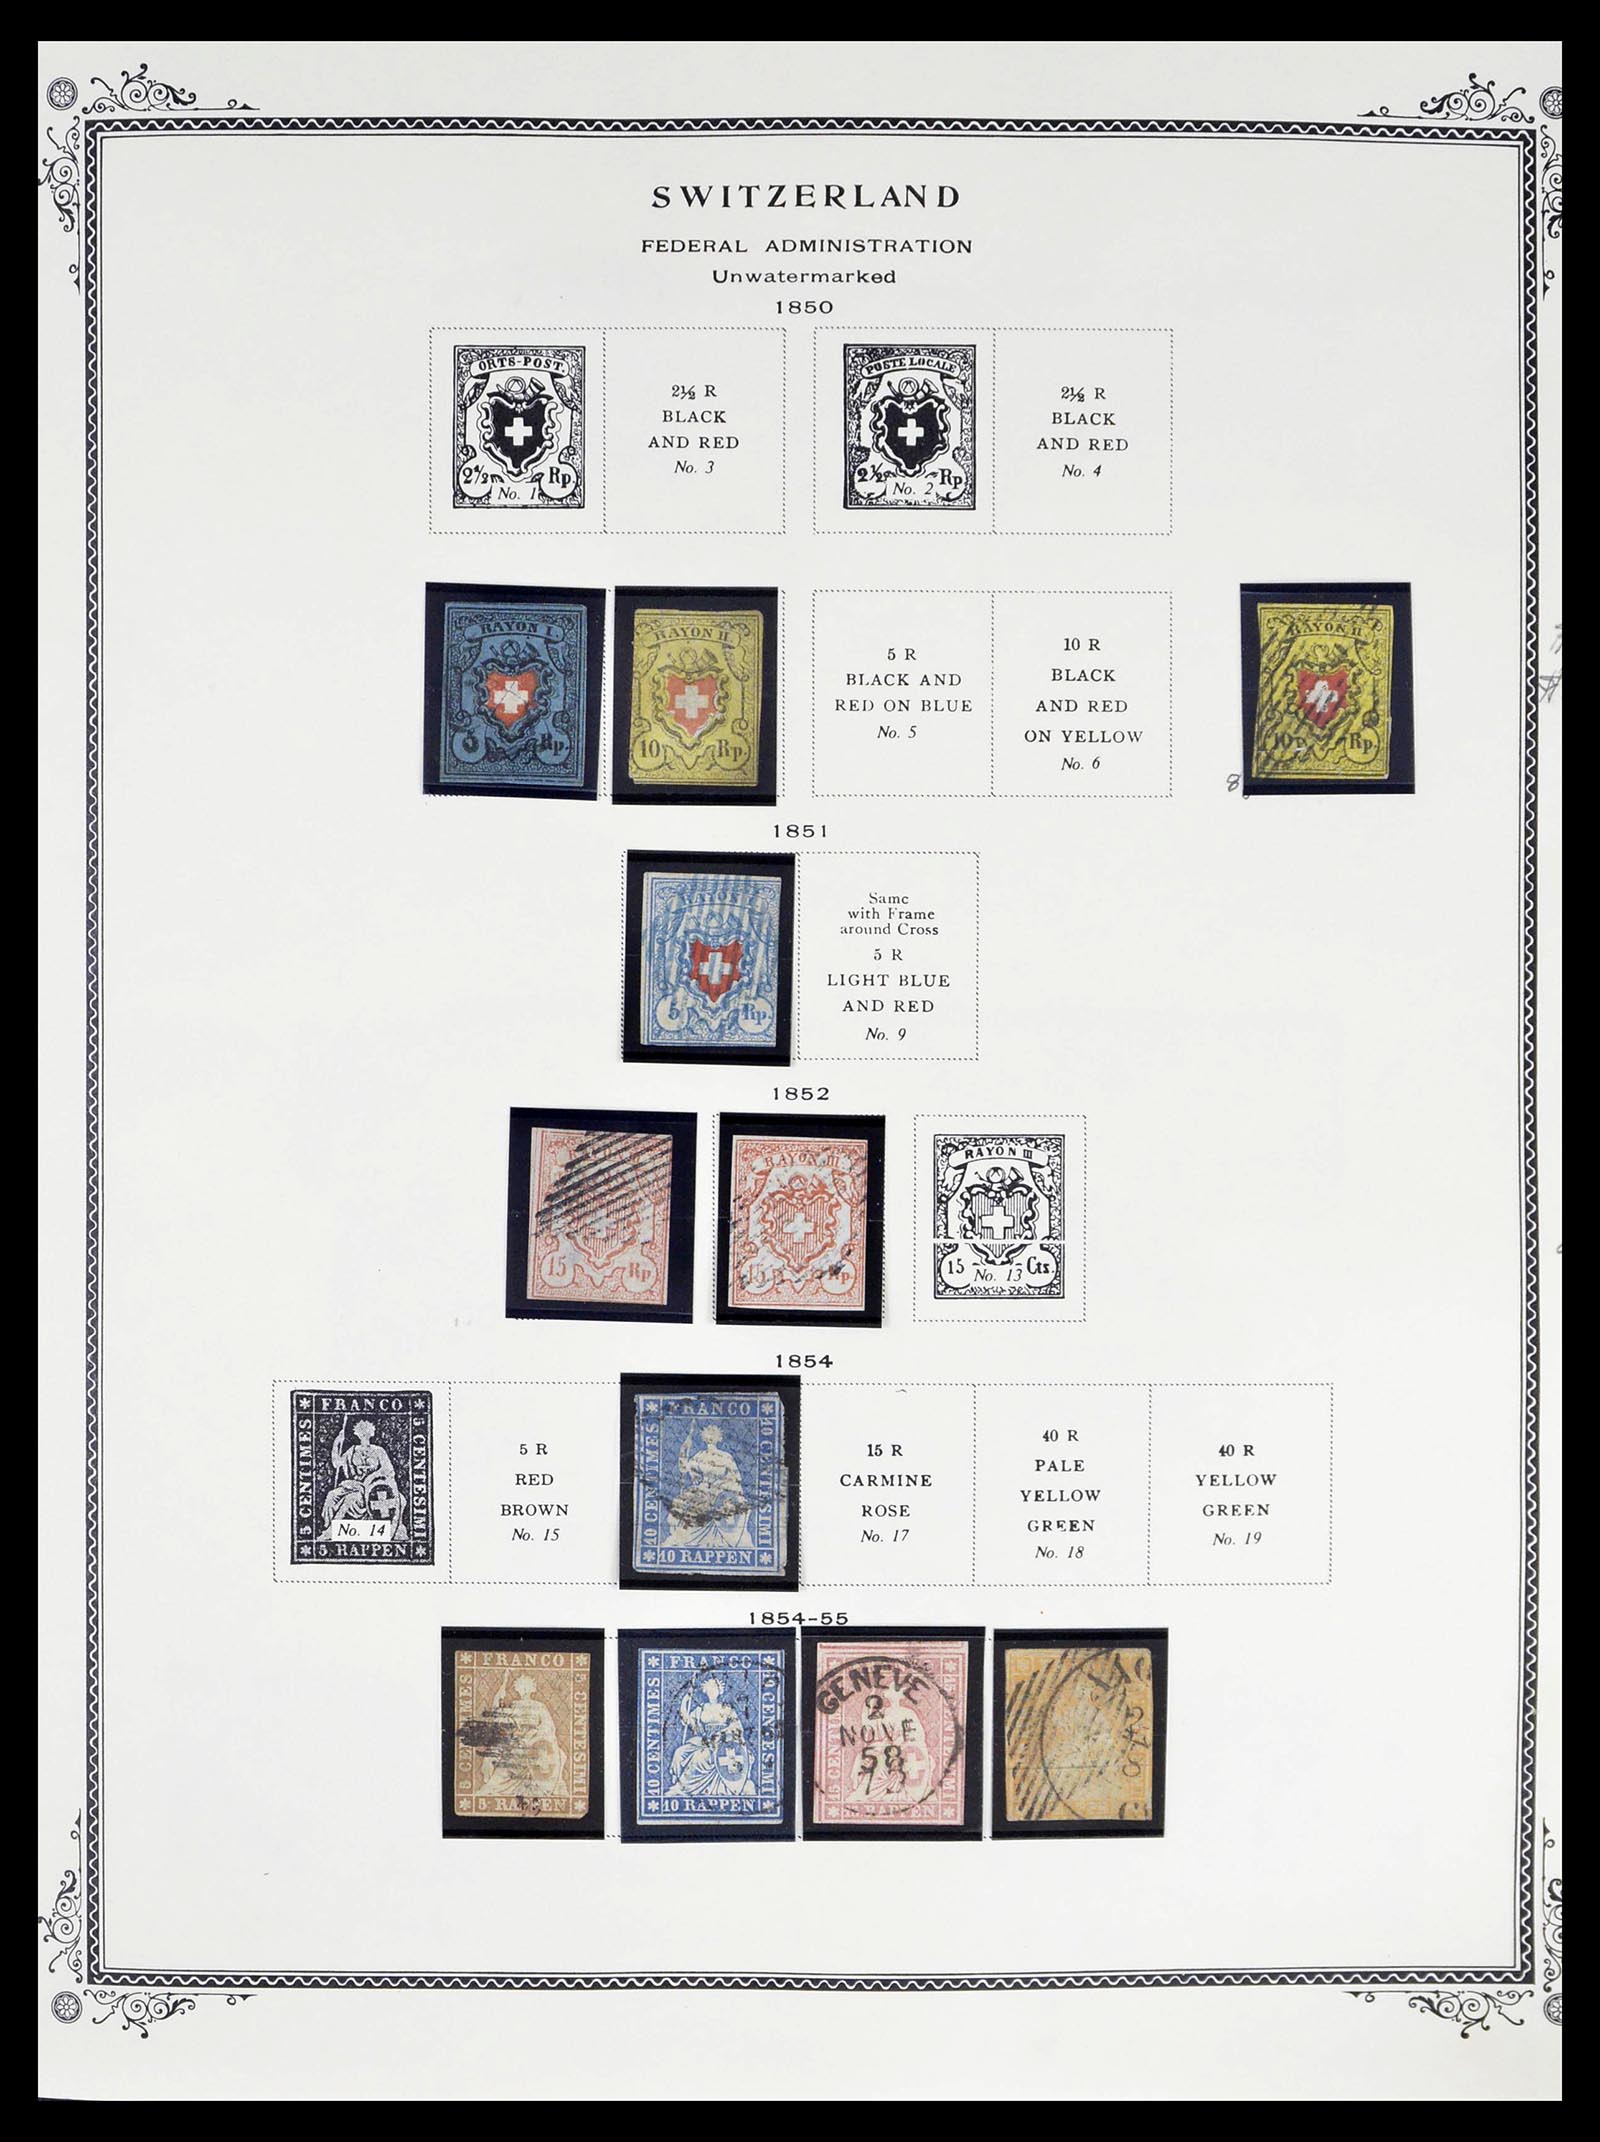 39178 0001 - Stamp collection 39178 Switzerland 1850-1989.